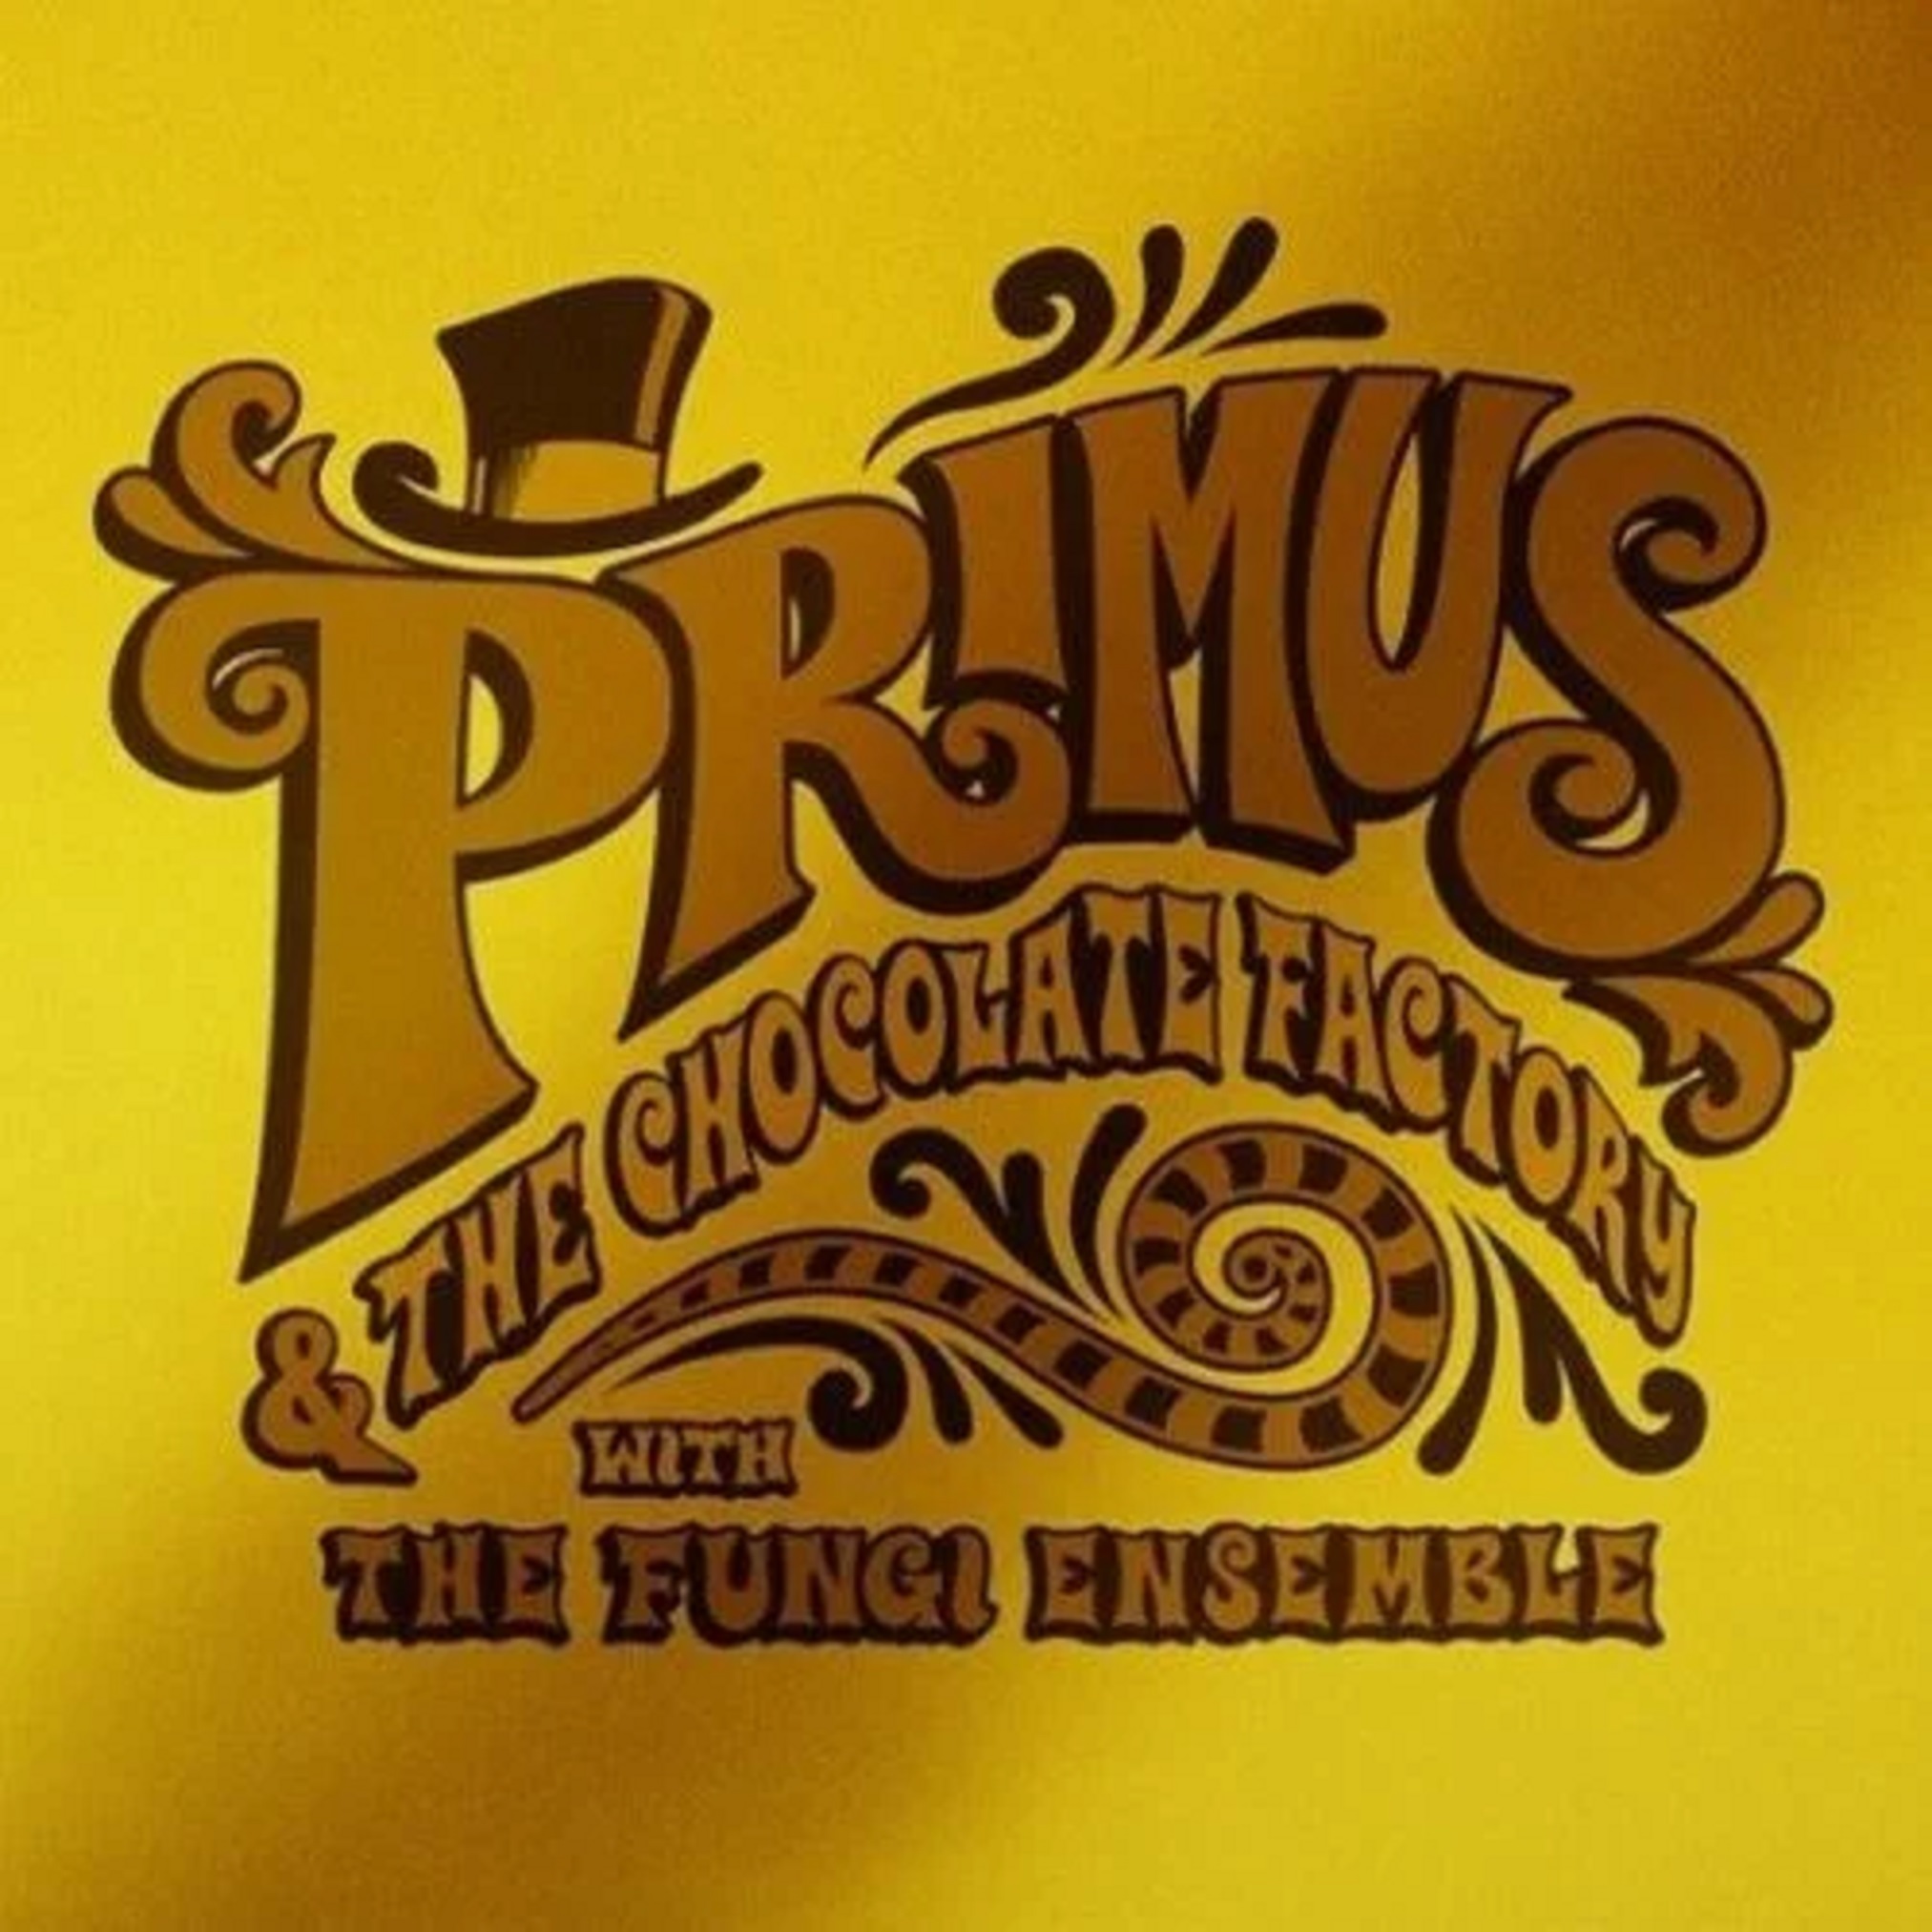 Primus & The Chocolate Factory With The Fungi Ensemble - Vinyl | Primus & The Chocolate Factory With The Fungi Ensemble